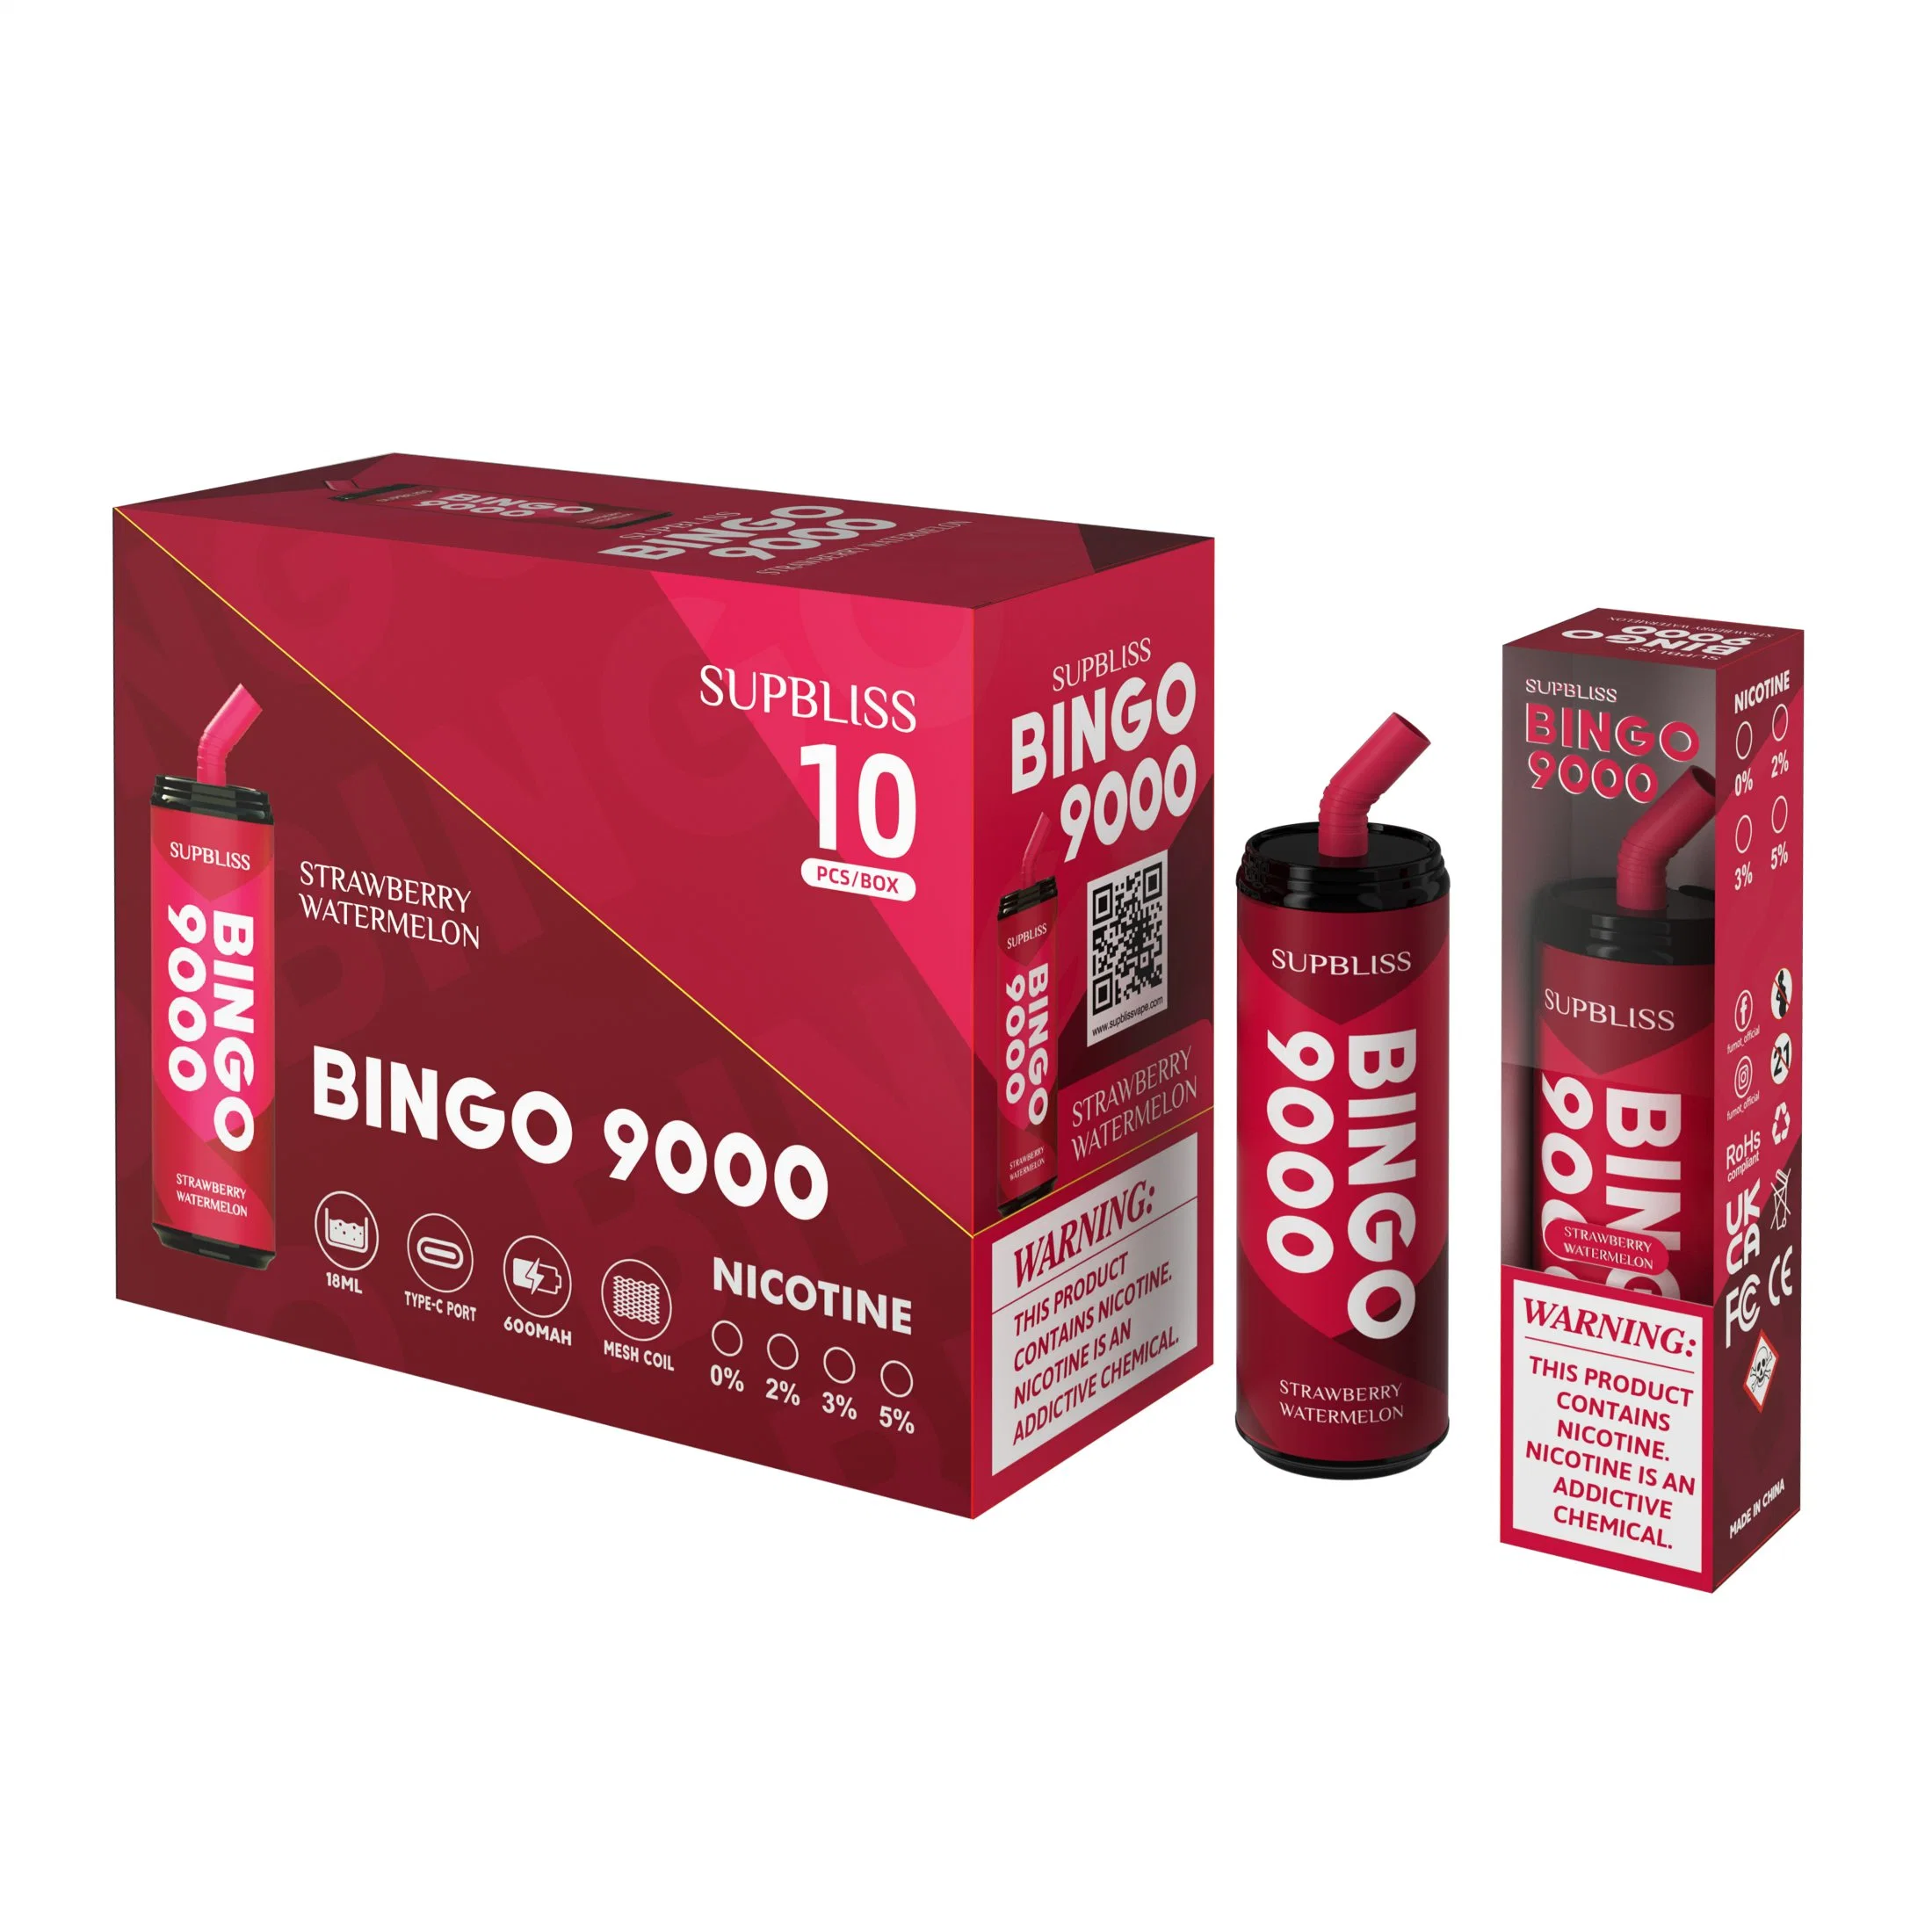 Fumot Randm Tornado Suppliss Bingo 9000 choux avec 13 saveurs